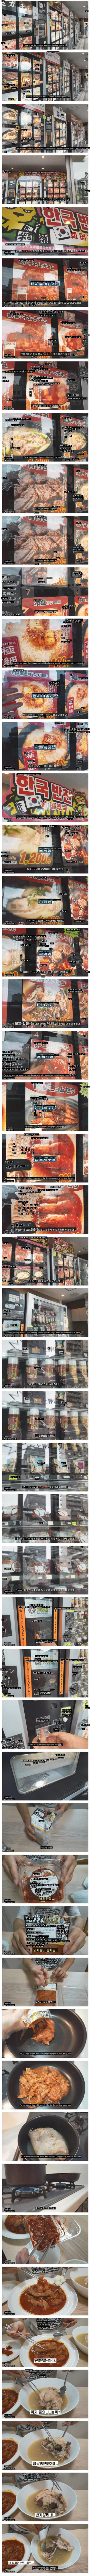 Quality of Korean food vending machines in Japan